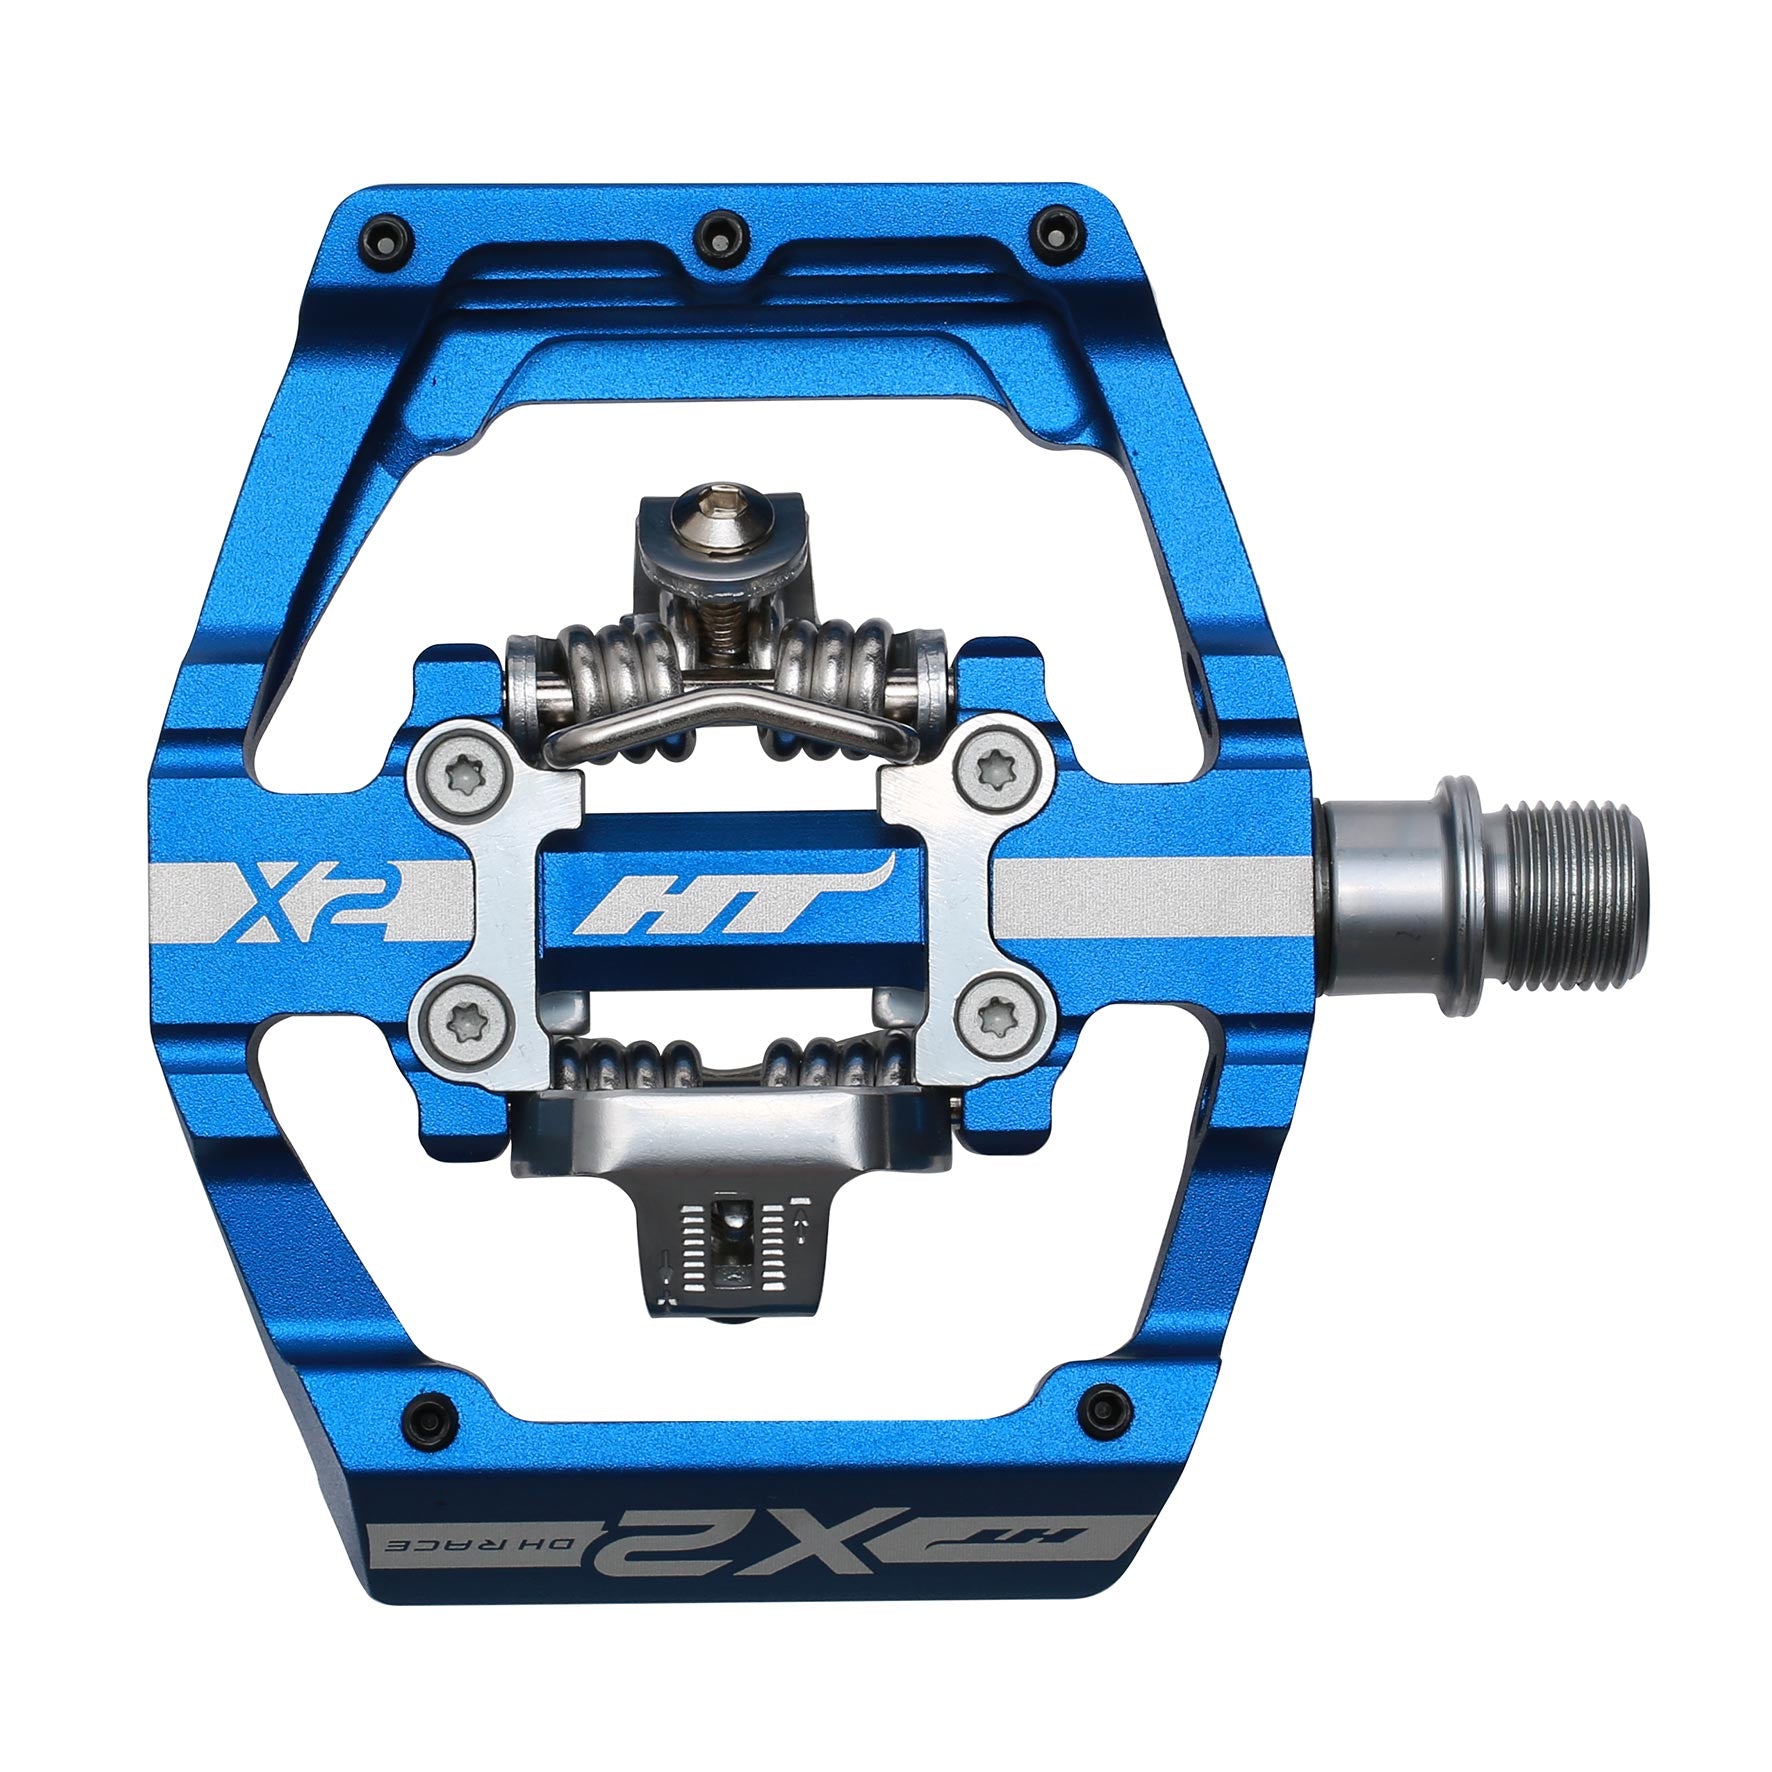 Ht X2 Pedals Alloy / CNC CRMO - Royal Blue